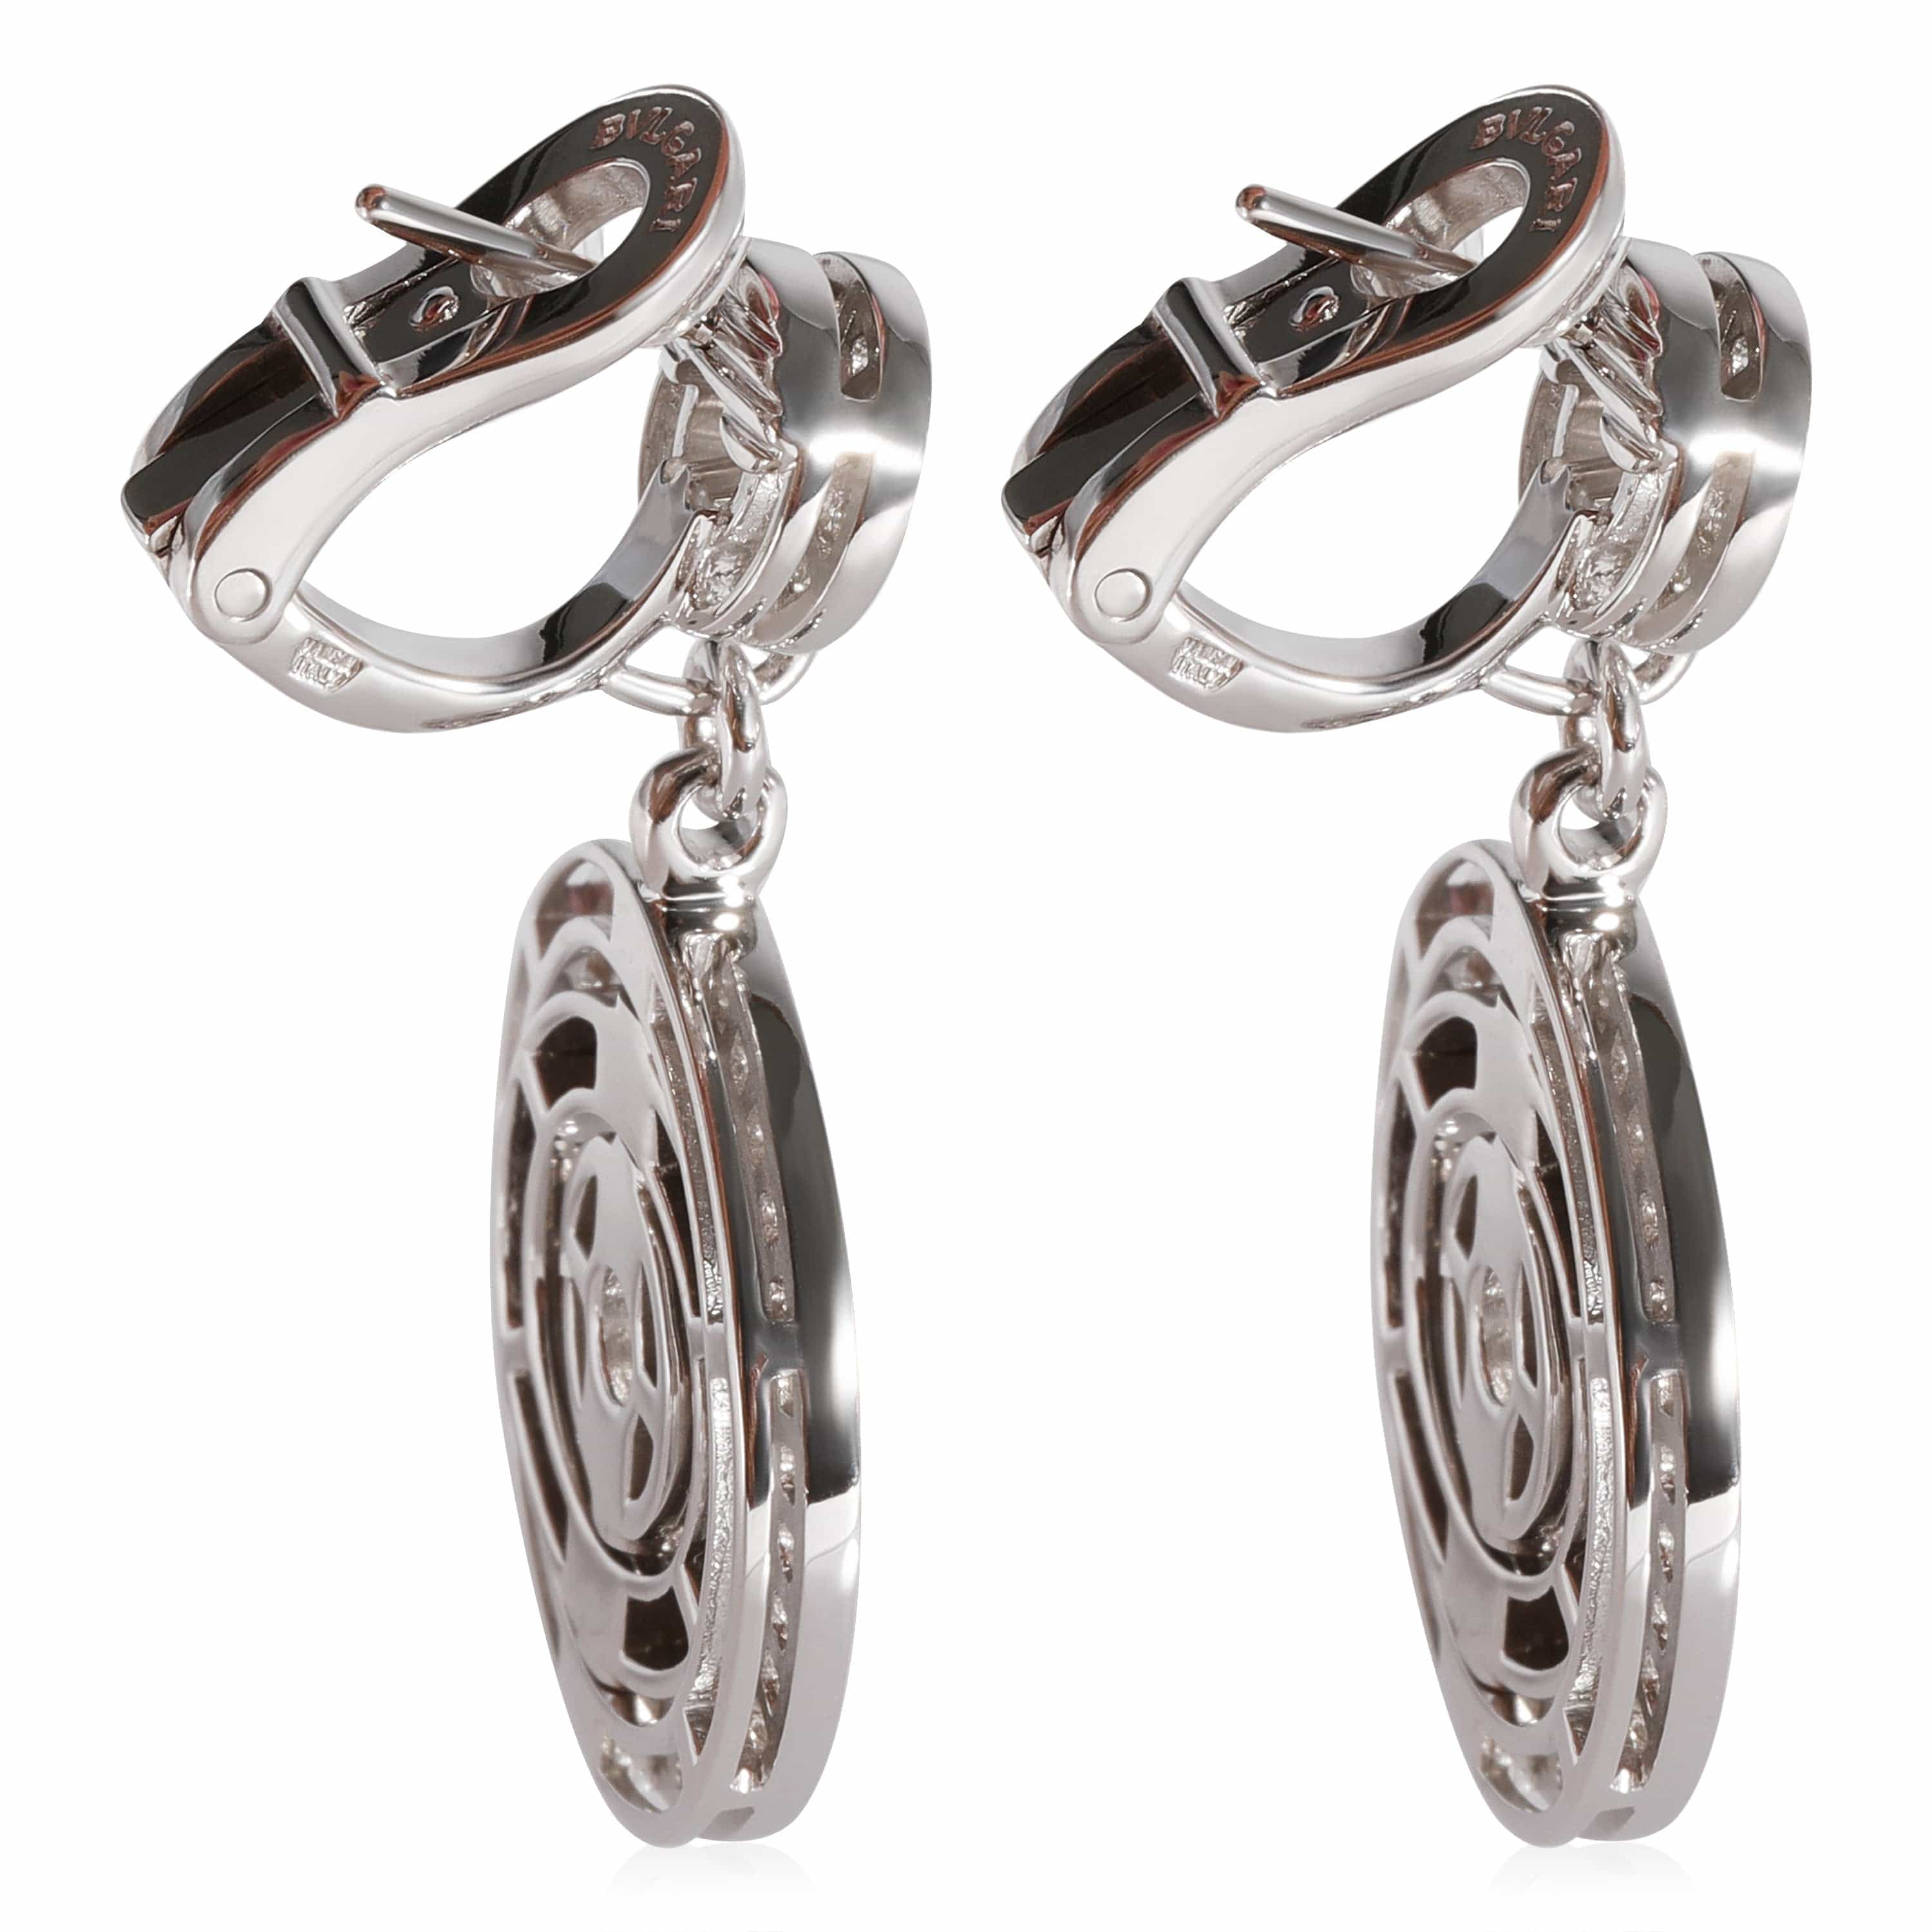 BVLGARI BVLGARI Astrale Cerchi Drop Diamond Earrings in 18k White Gold 1 3/8 CTW